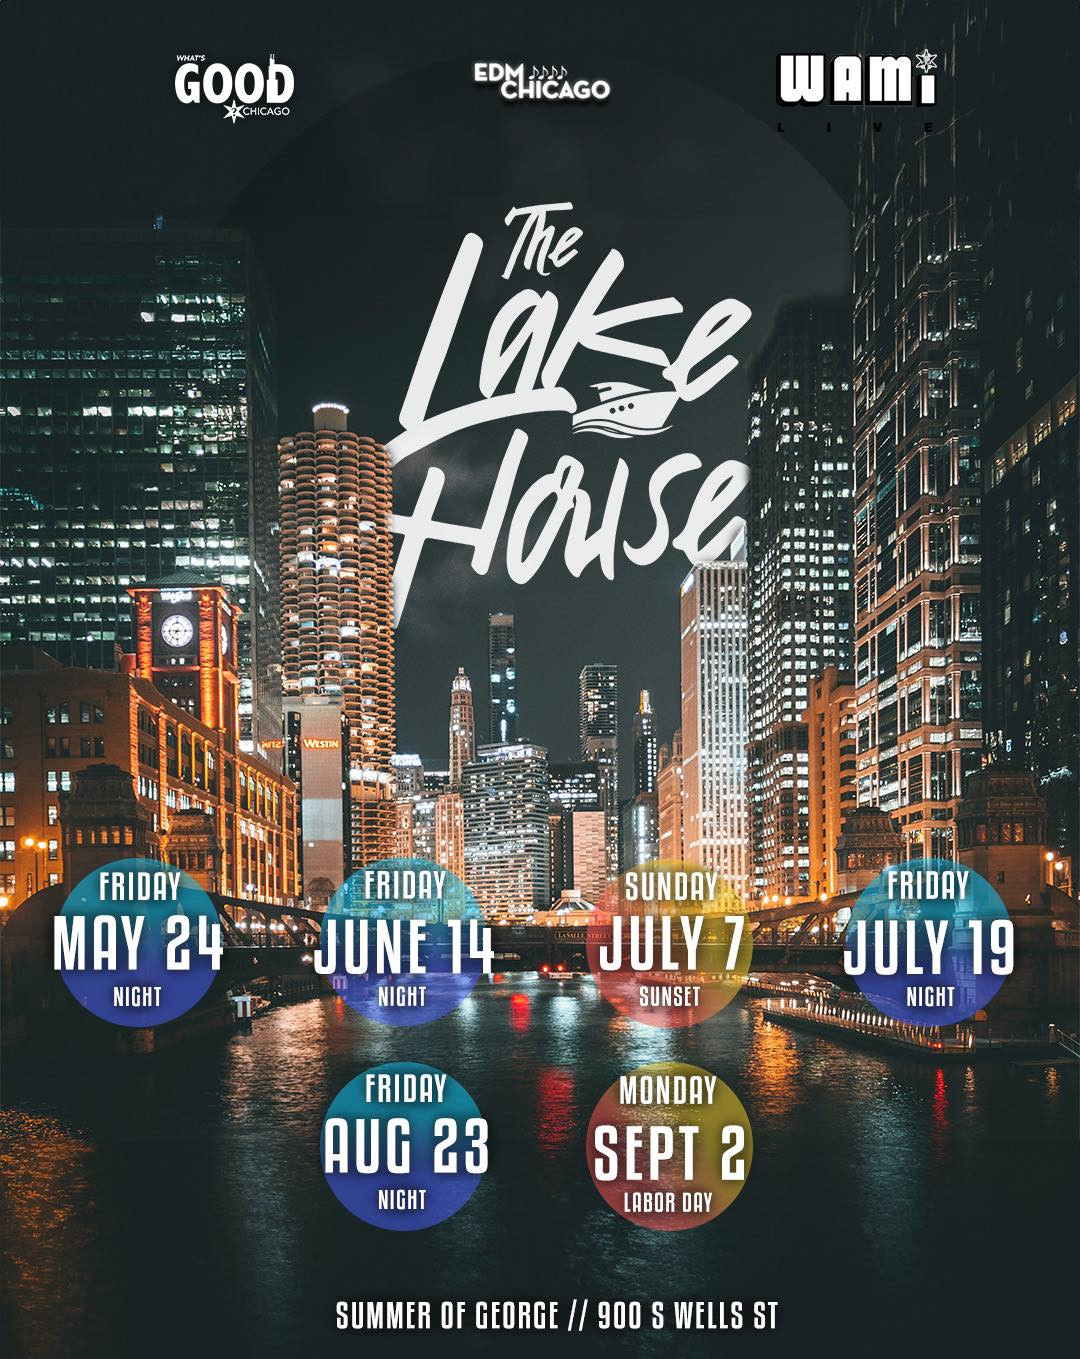 "The Lake House" (Sundown Cruise) 8/23